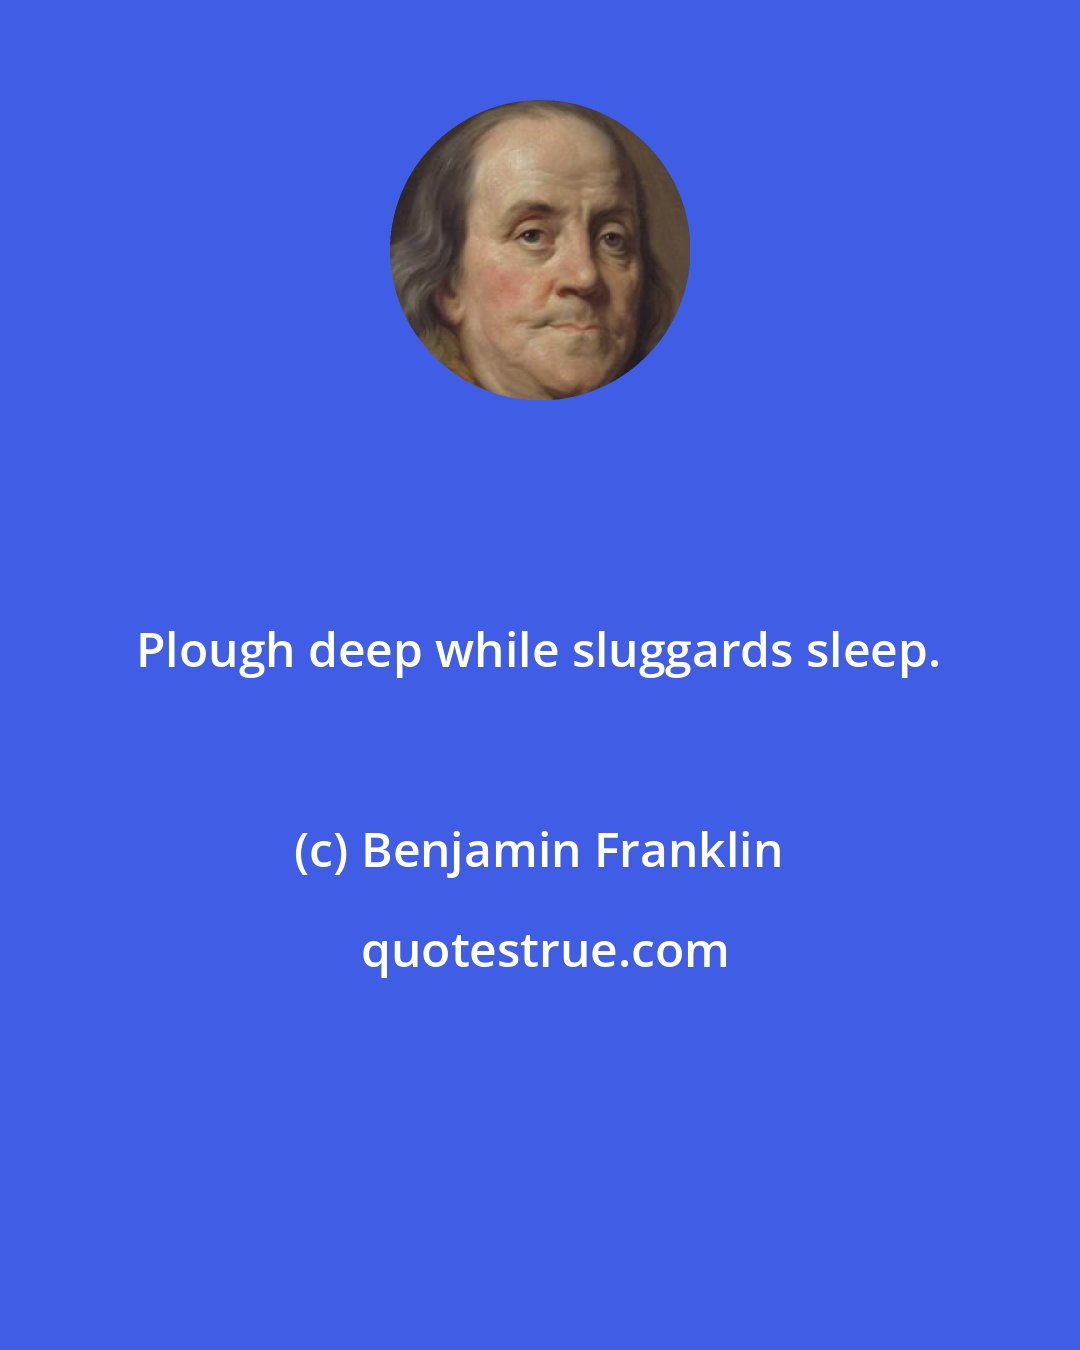 Benjamin Franklin: Plough deep while sluggards sleep.